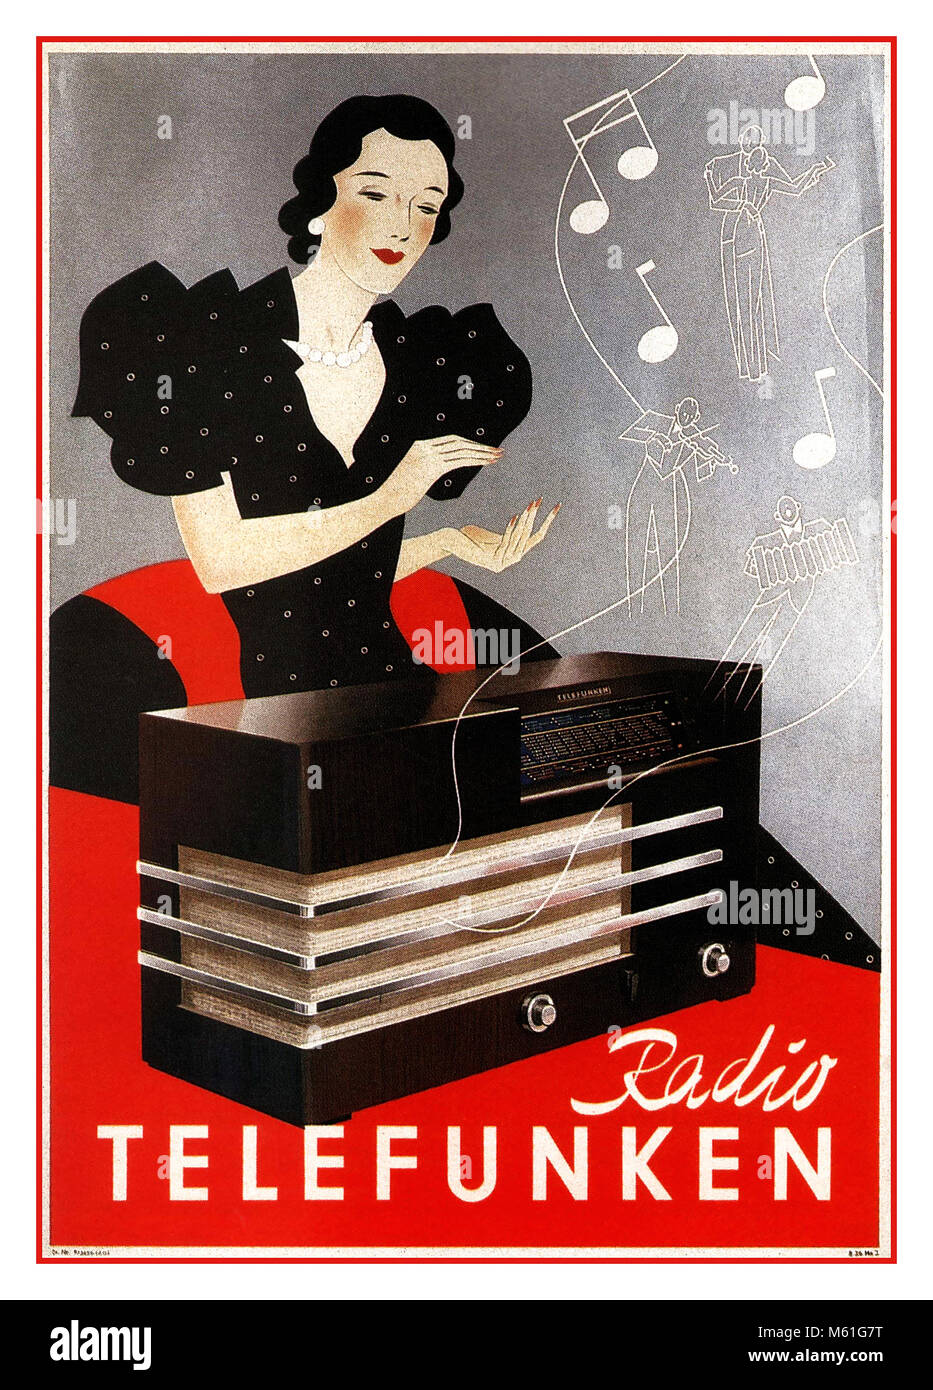 1935 ‘Radio Telefunken’ Vintage pre war advertising poster for German Telefunken radio and television electricals company Stock Photo